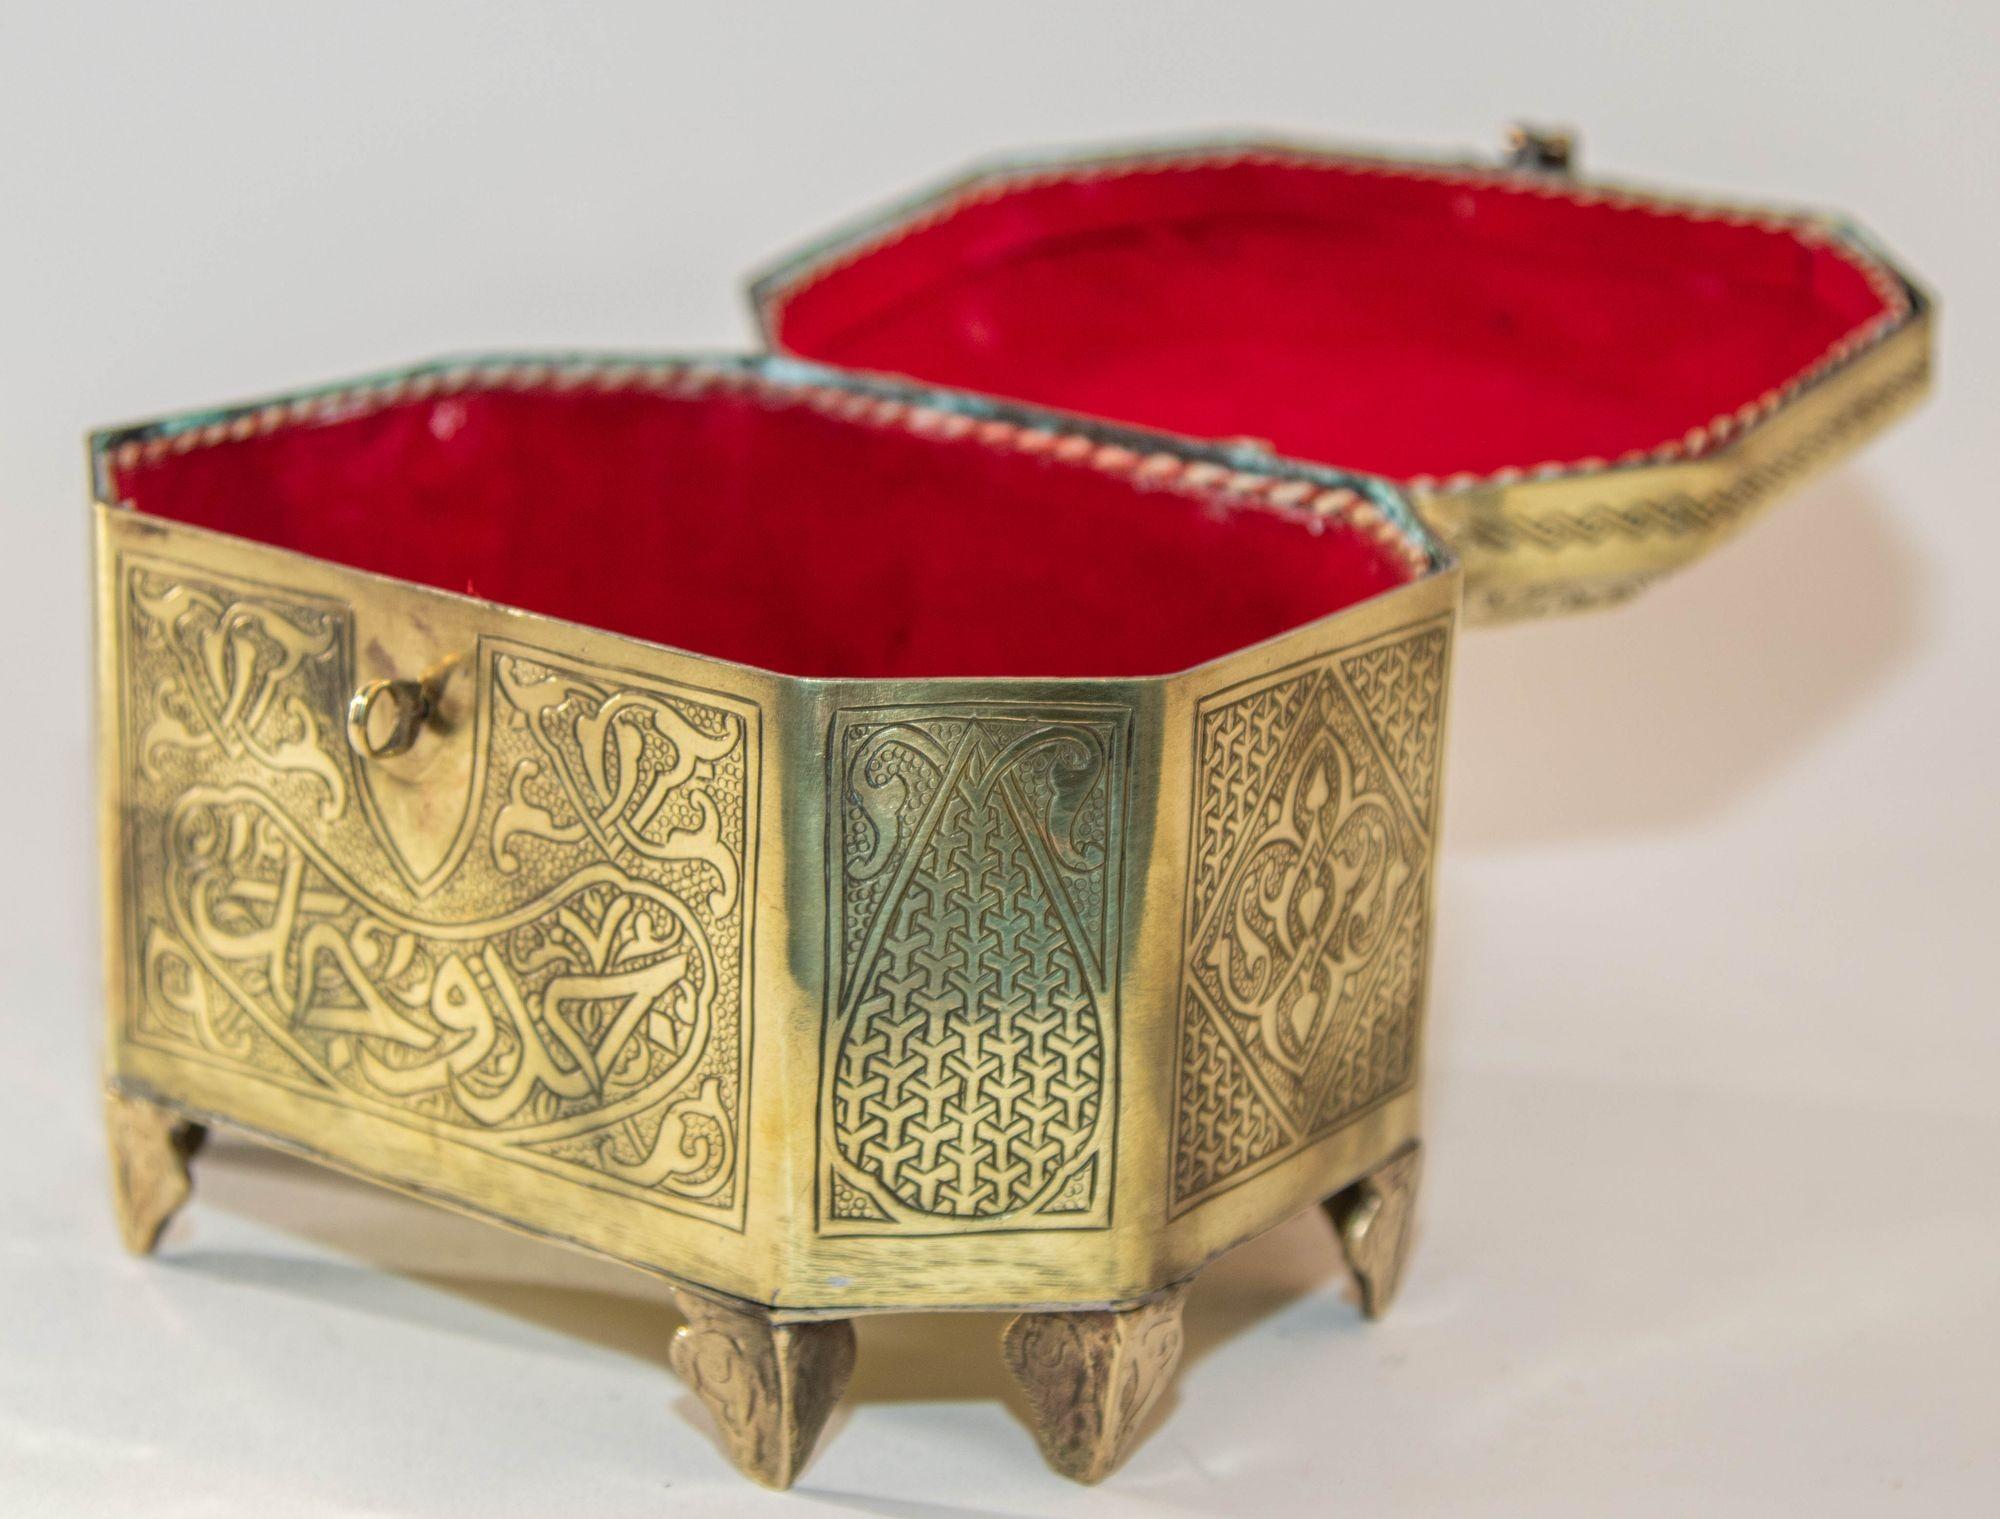 1920 Persian Brass Jewelry Box in Mamluk Revival Damascene Moorish Islamic Style For Sale 1